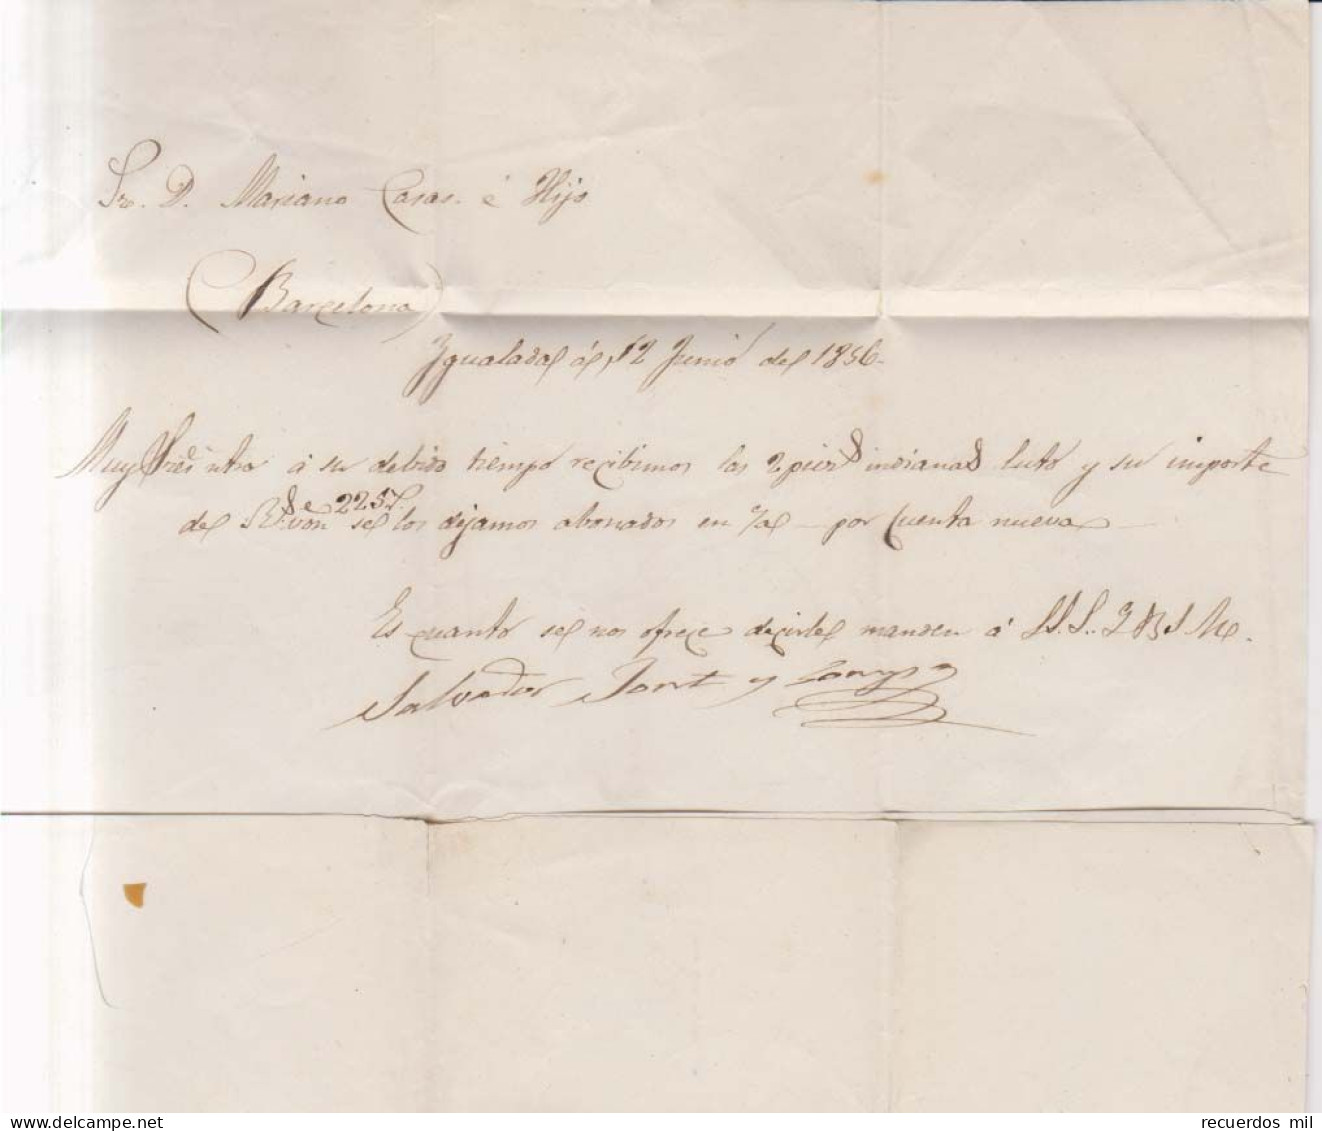 Año 1856 Edifil 44 Isabel II Carta Matasellos Rejilla Y Azul Igualada Salvador Font - Briefe U. Dokumente